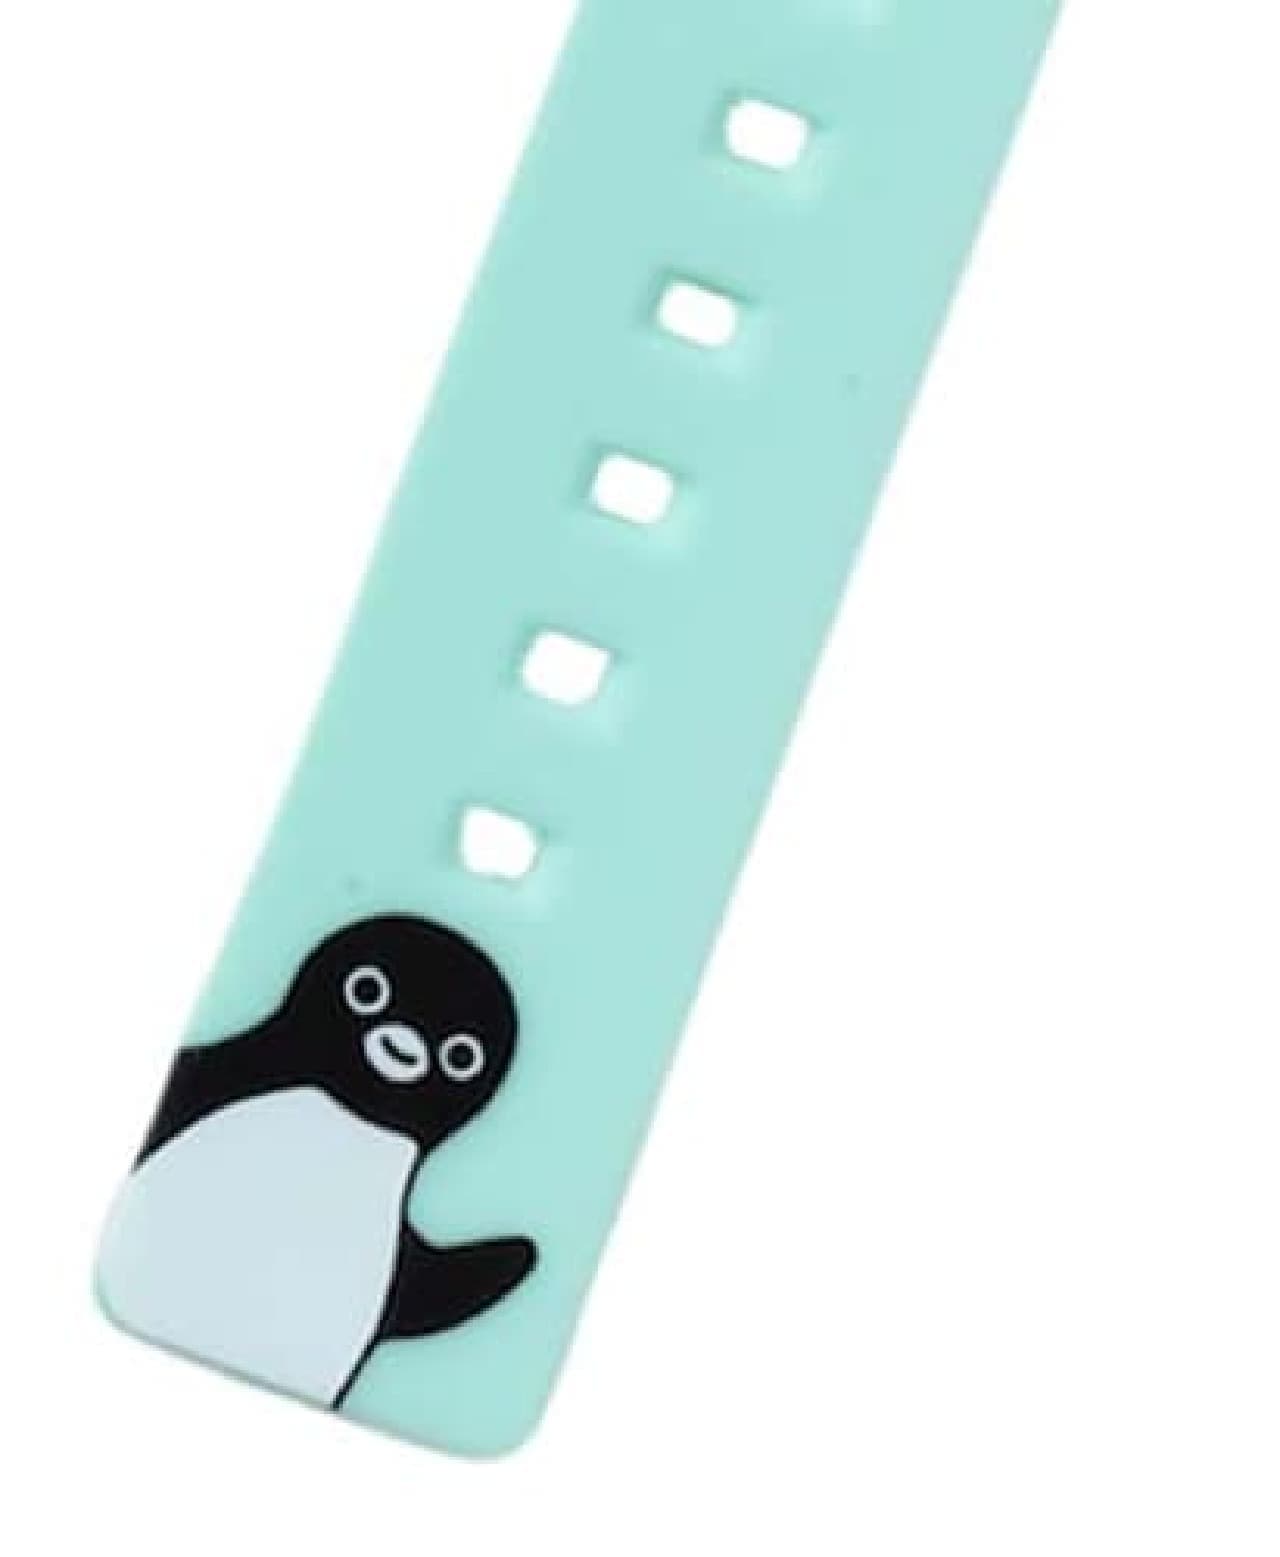 「Suicaのペンギン」をデザインした「Q&Q Smile Solar×Suica's Penguin腕時計」が登場。12月2日より販売されます。